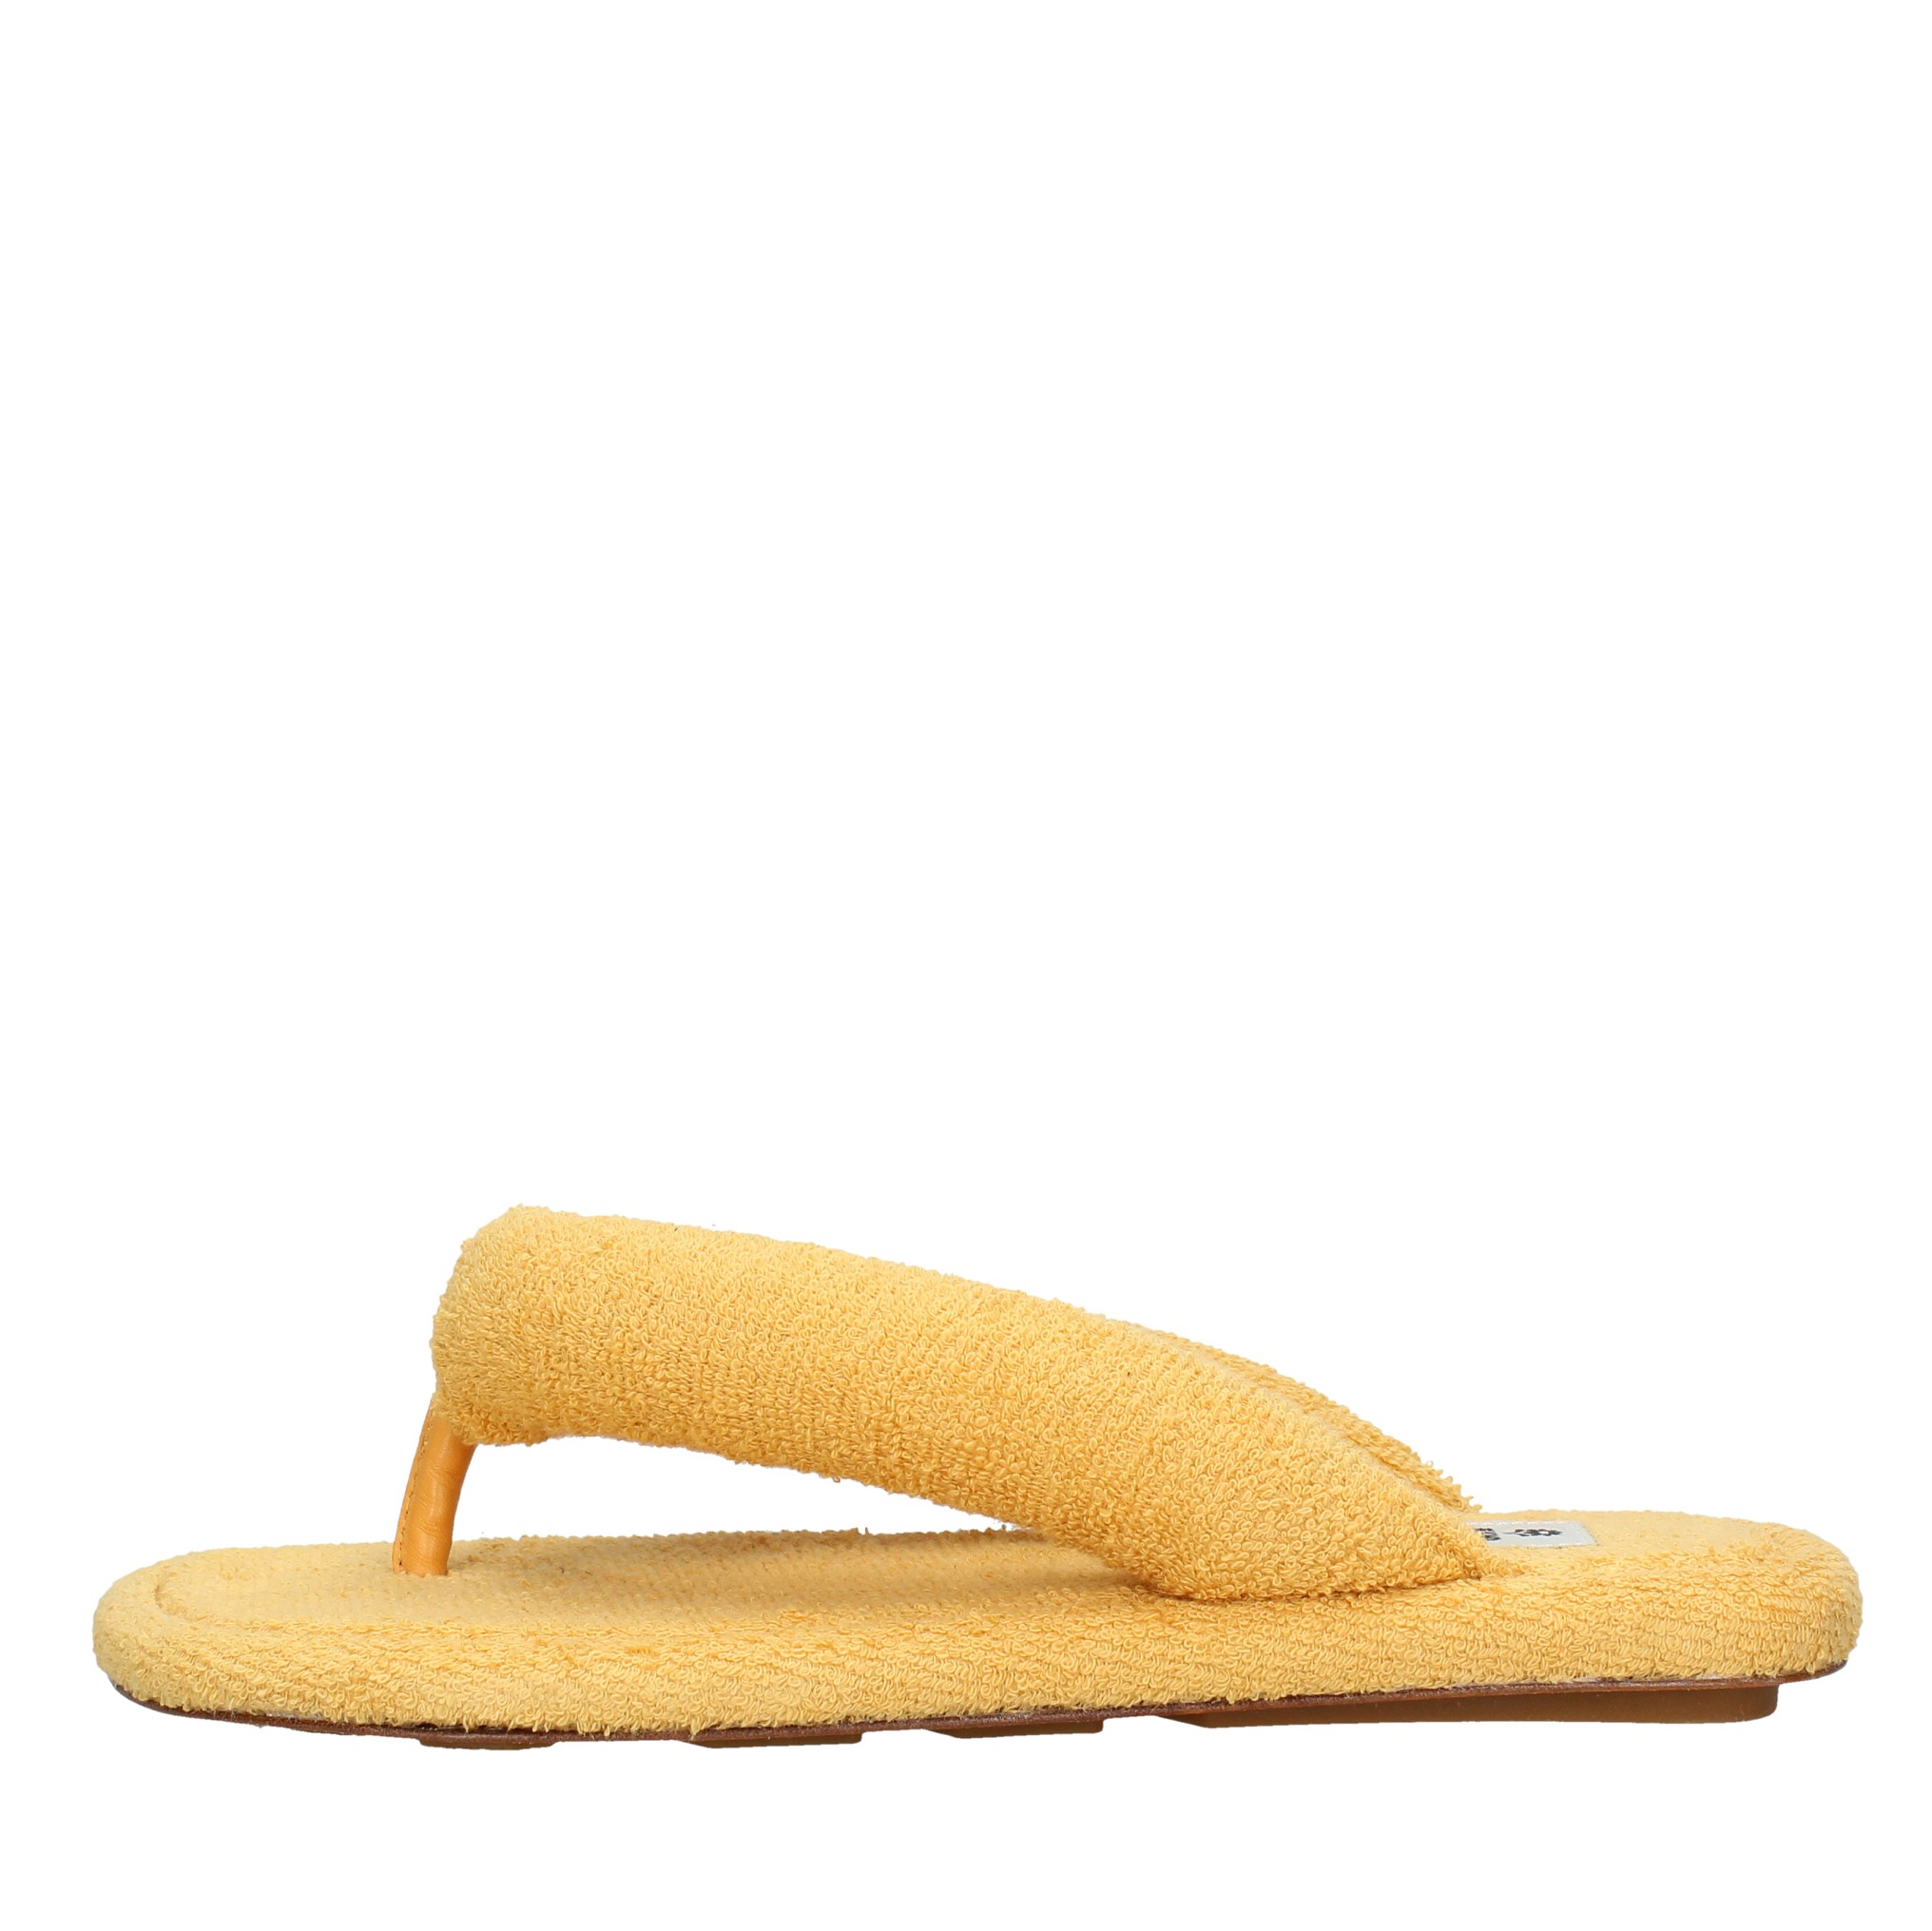 Flip-flop sandals made of fabric - ASH - Ginevra calzature